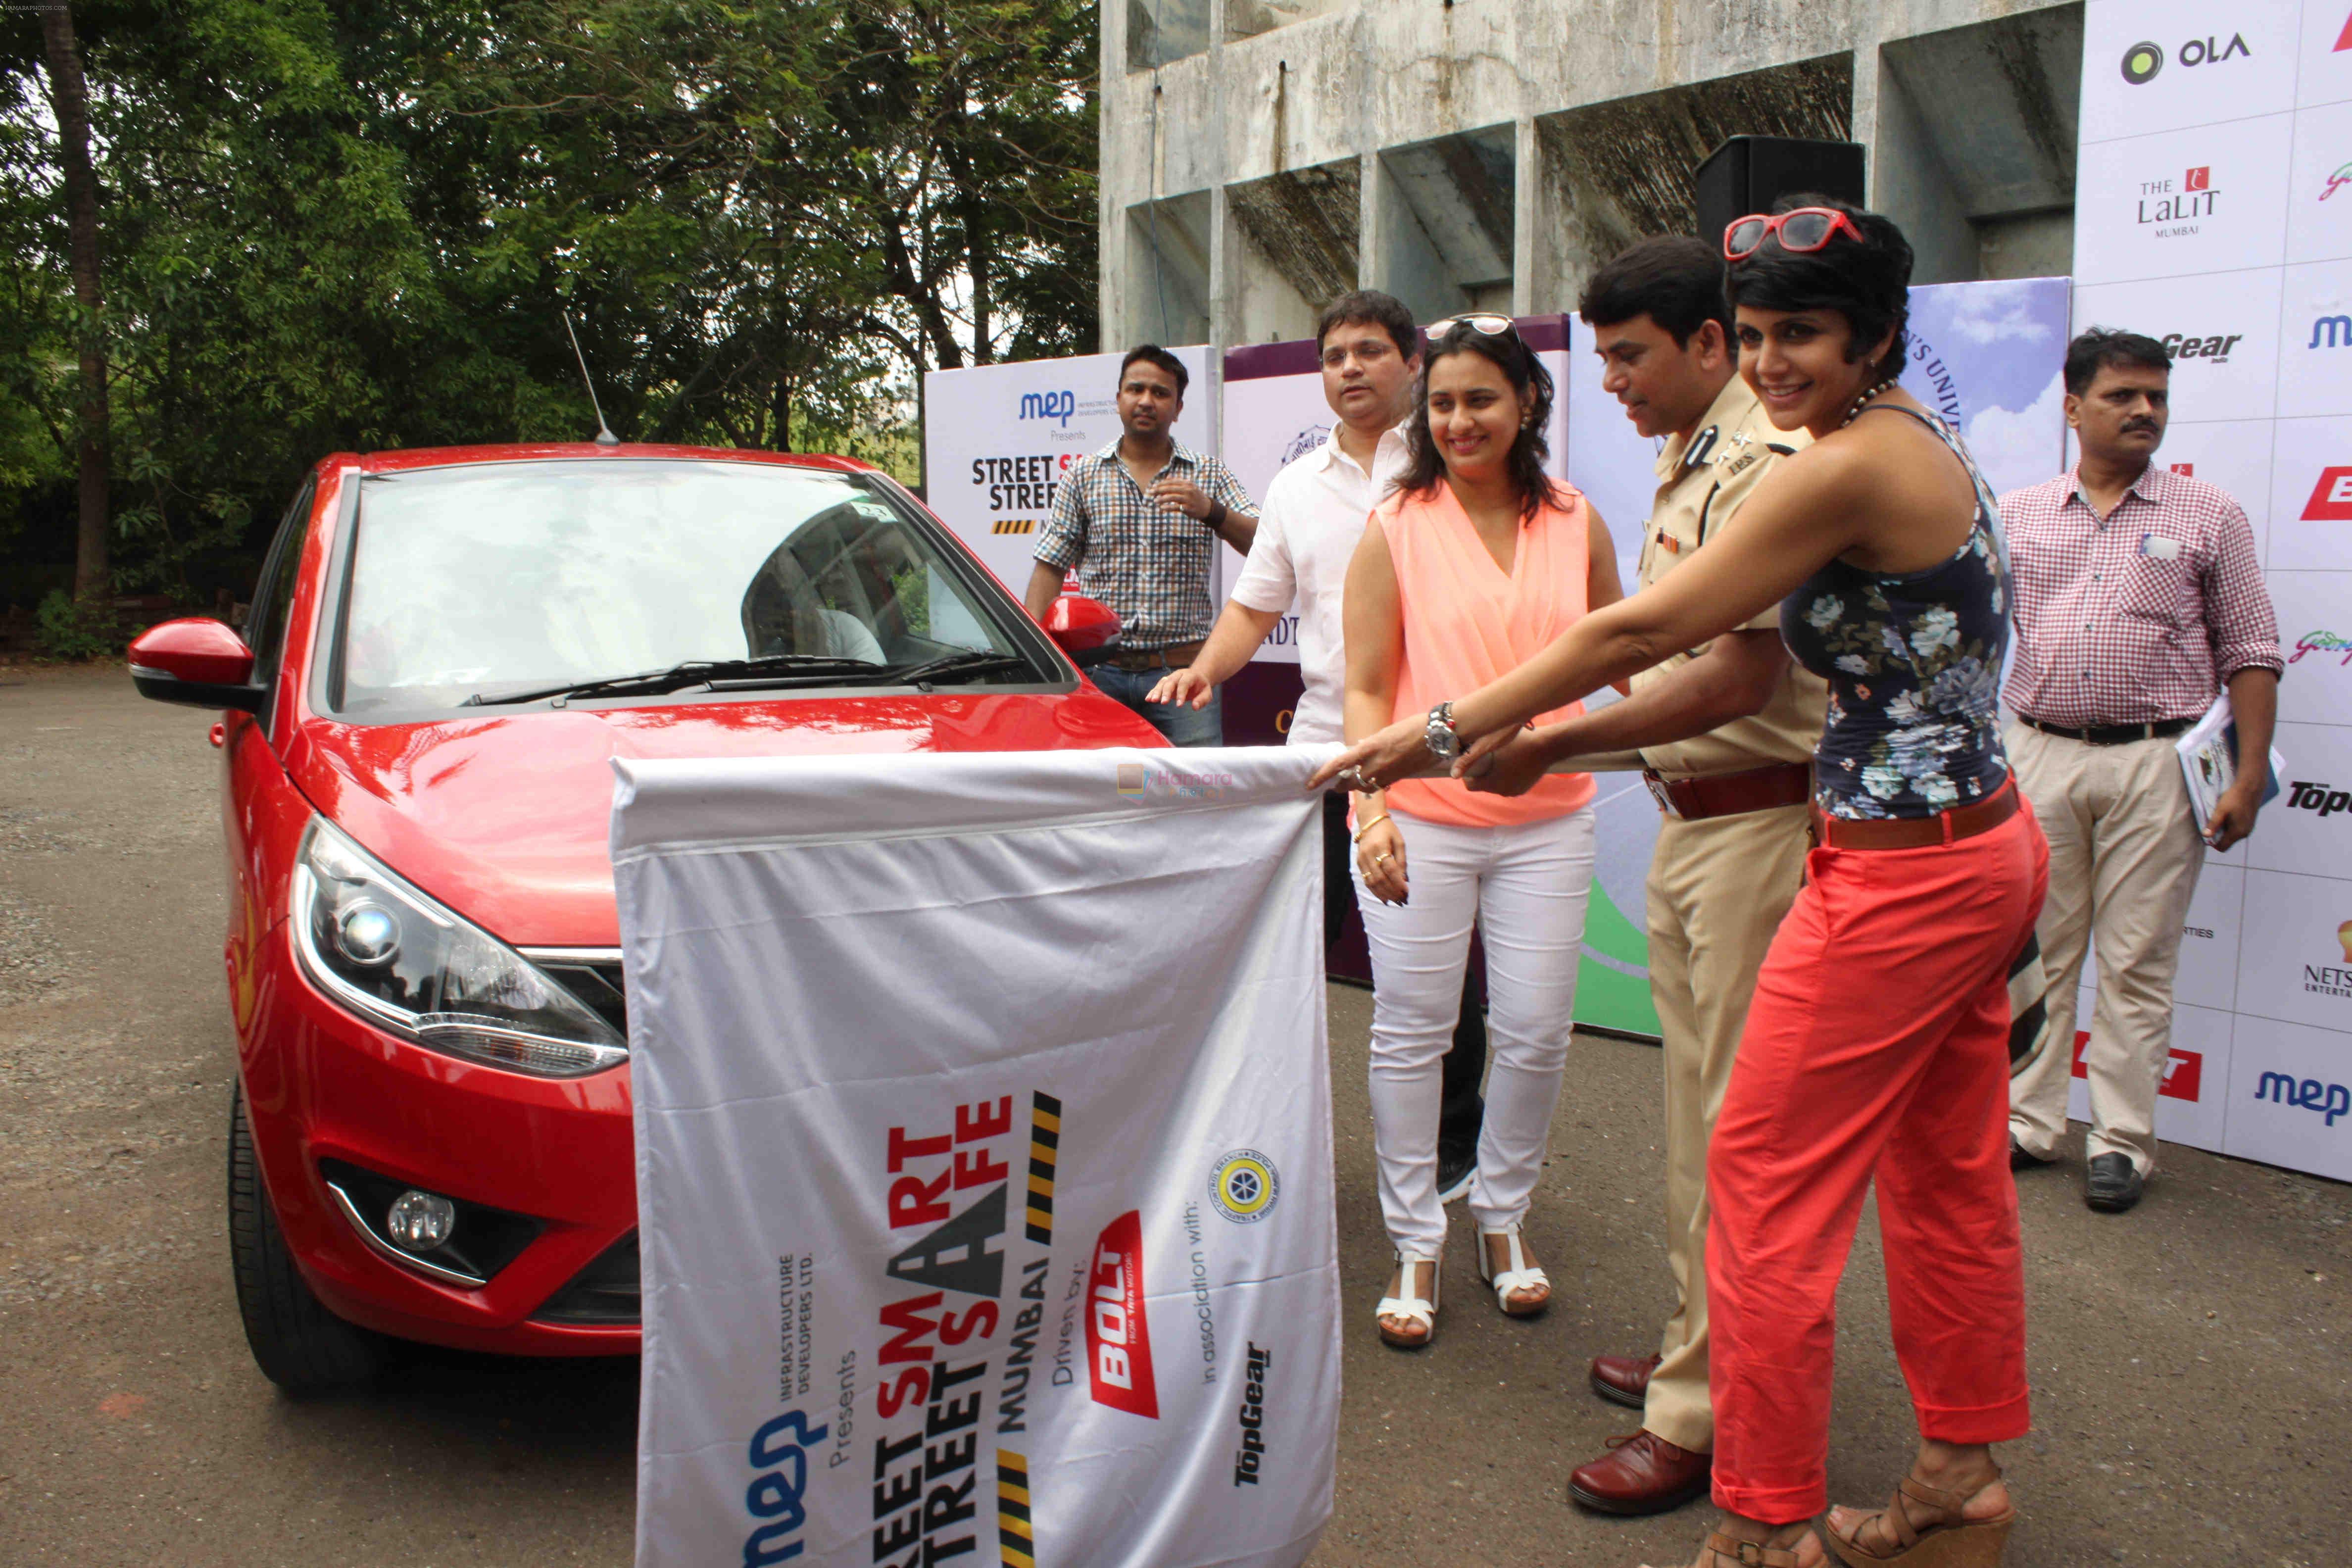 Mandira Bedi flags off the Street smart street safe women safety drive in Mumbai on 8th July 2015